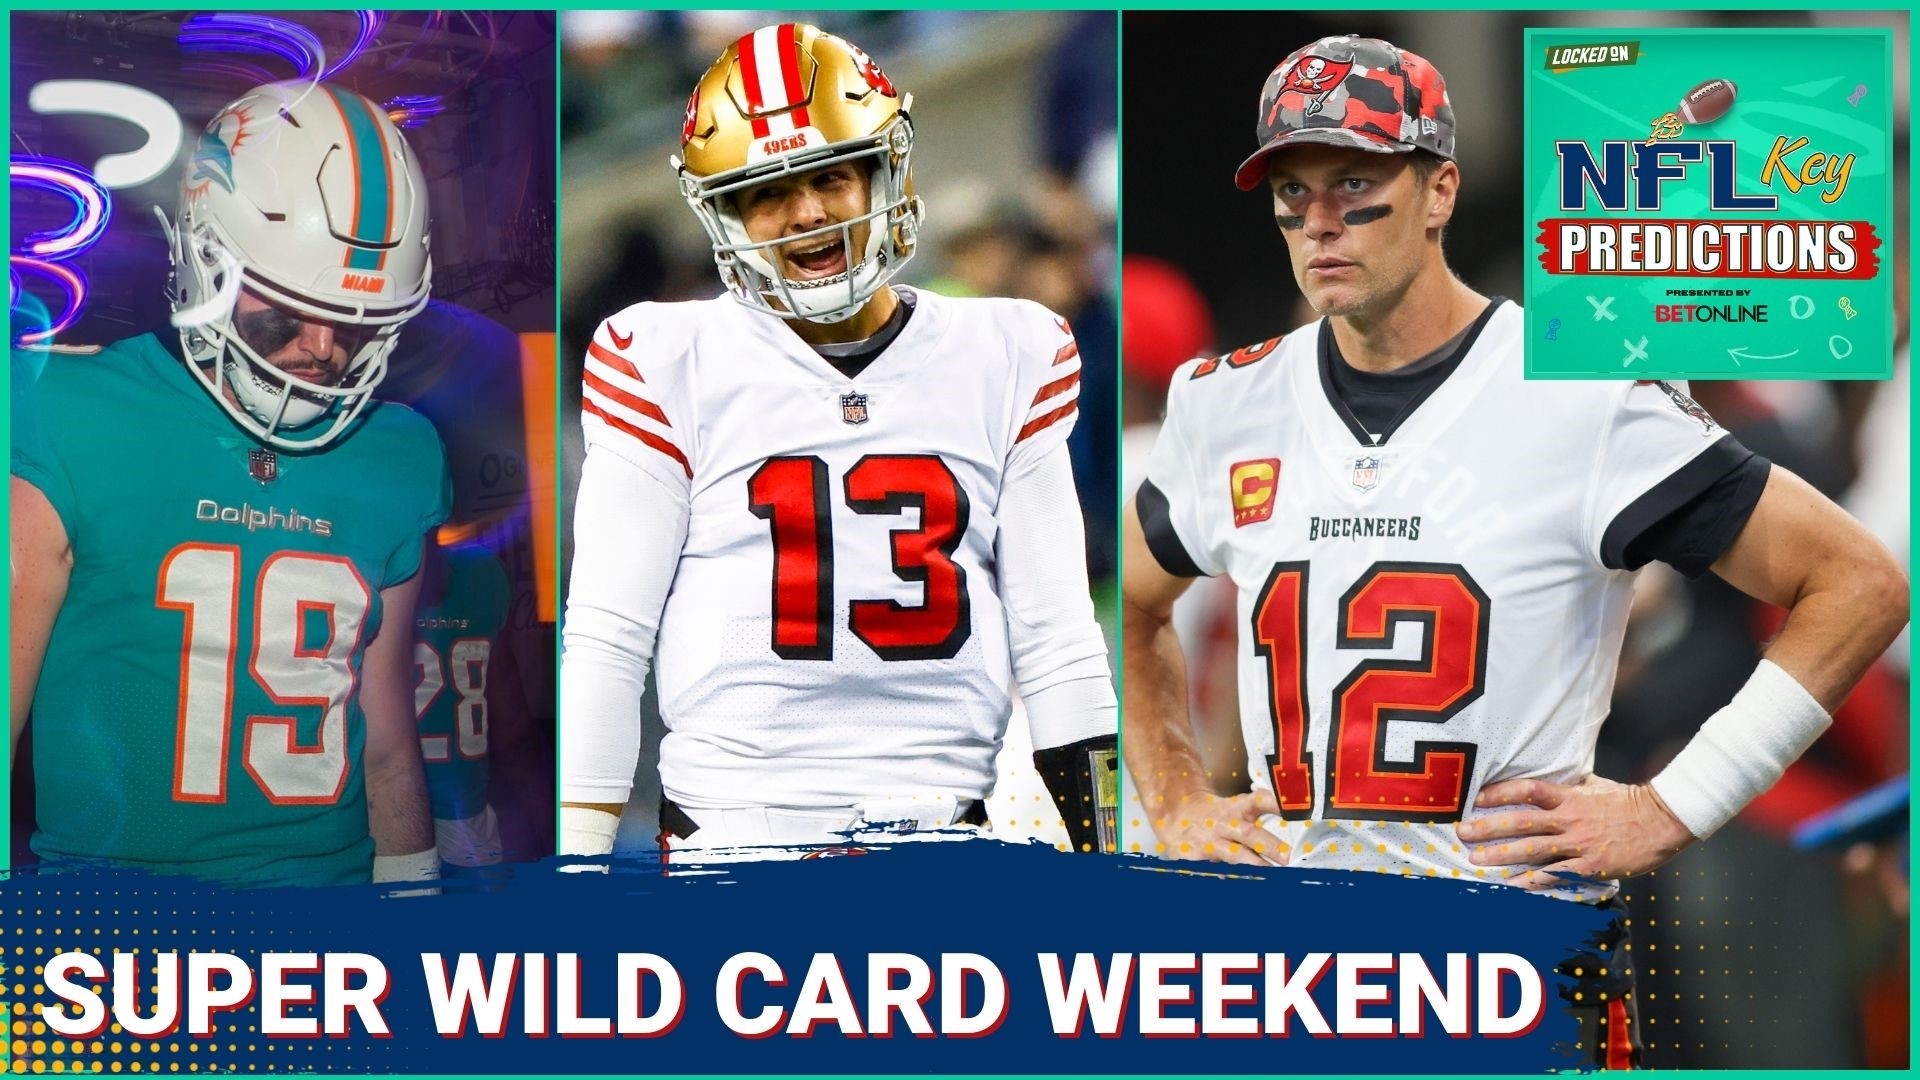 NFL Key Predictions: Super Wild Card Weekend